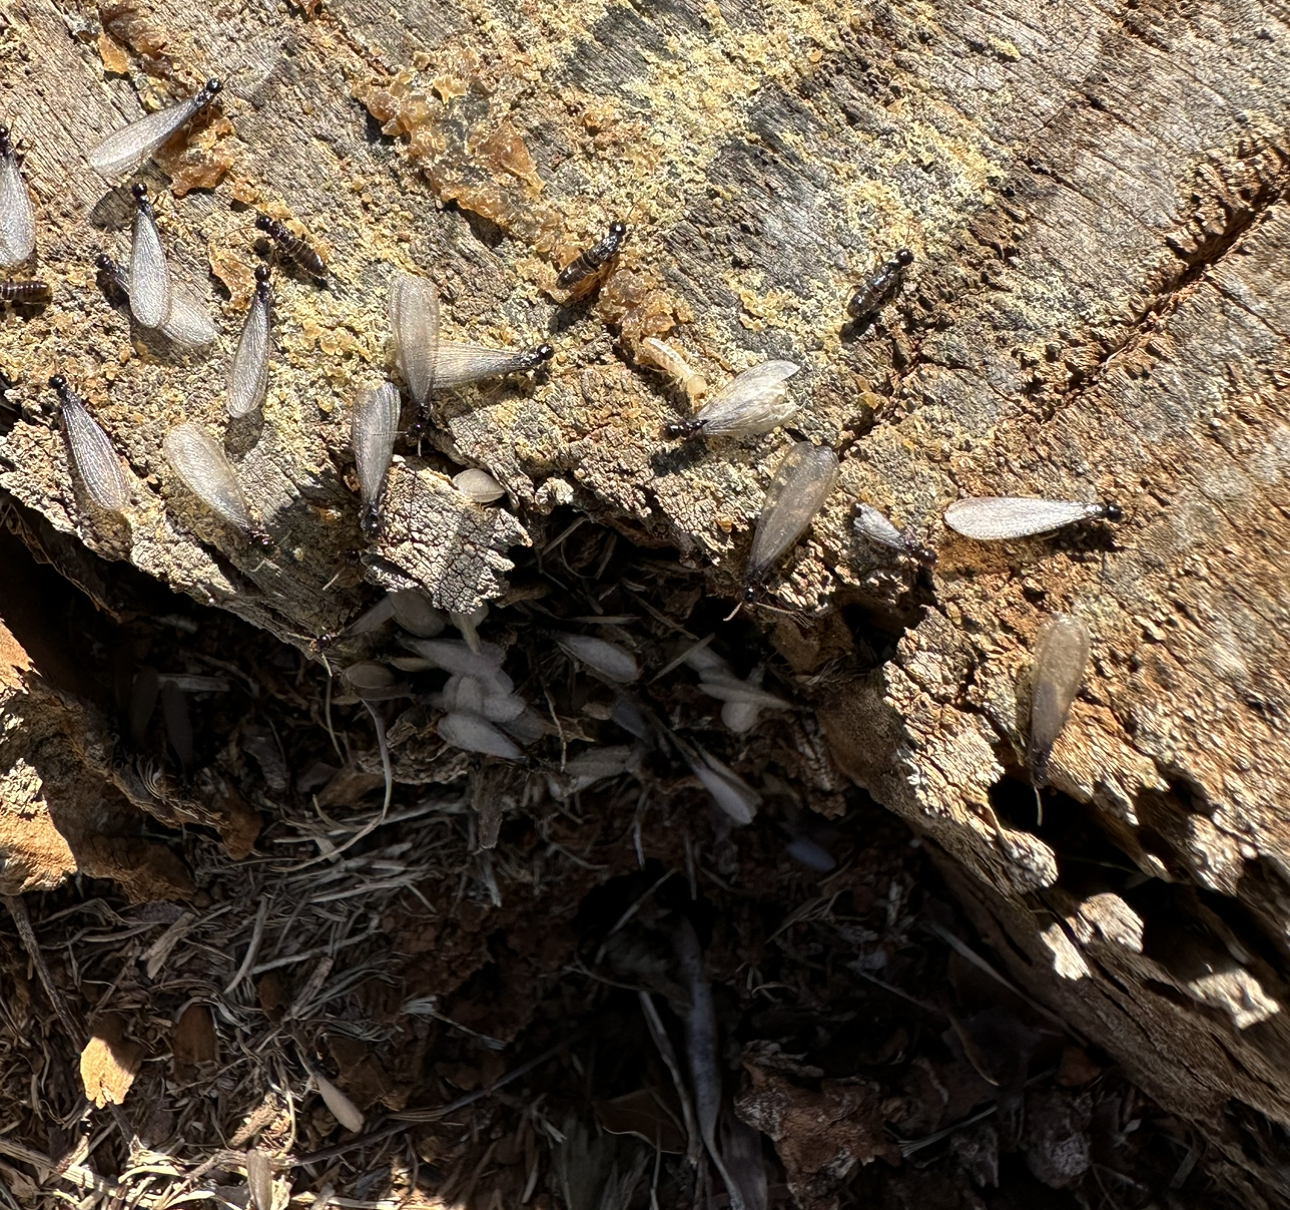 Subterranean termites pest control termite hidden damage dahlonega cumming dawsonville Georgia Cleveland Ga